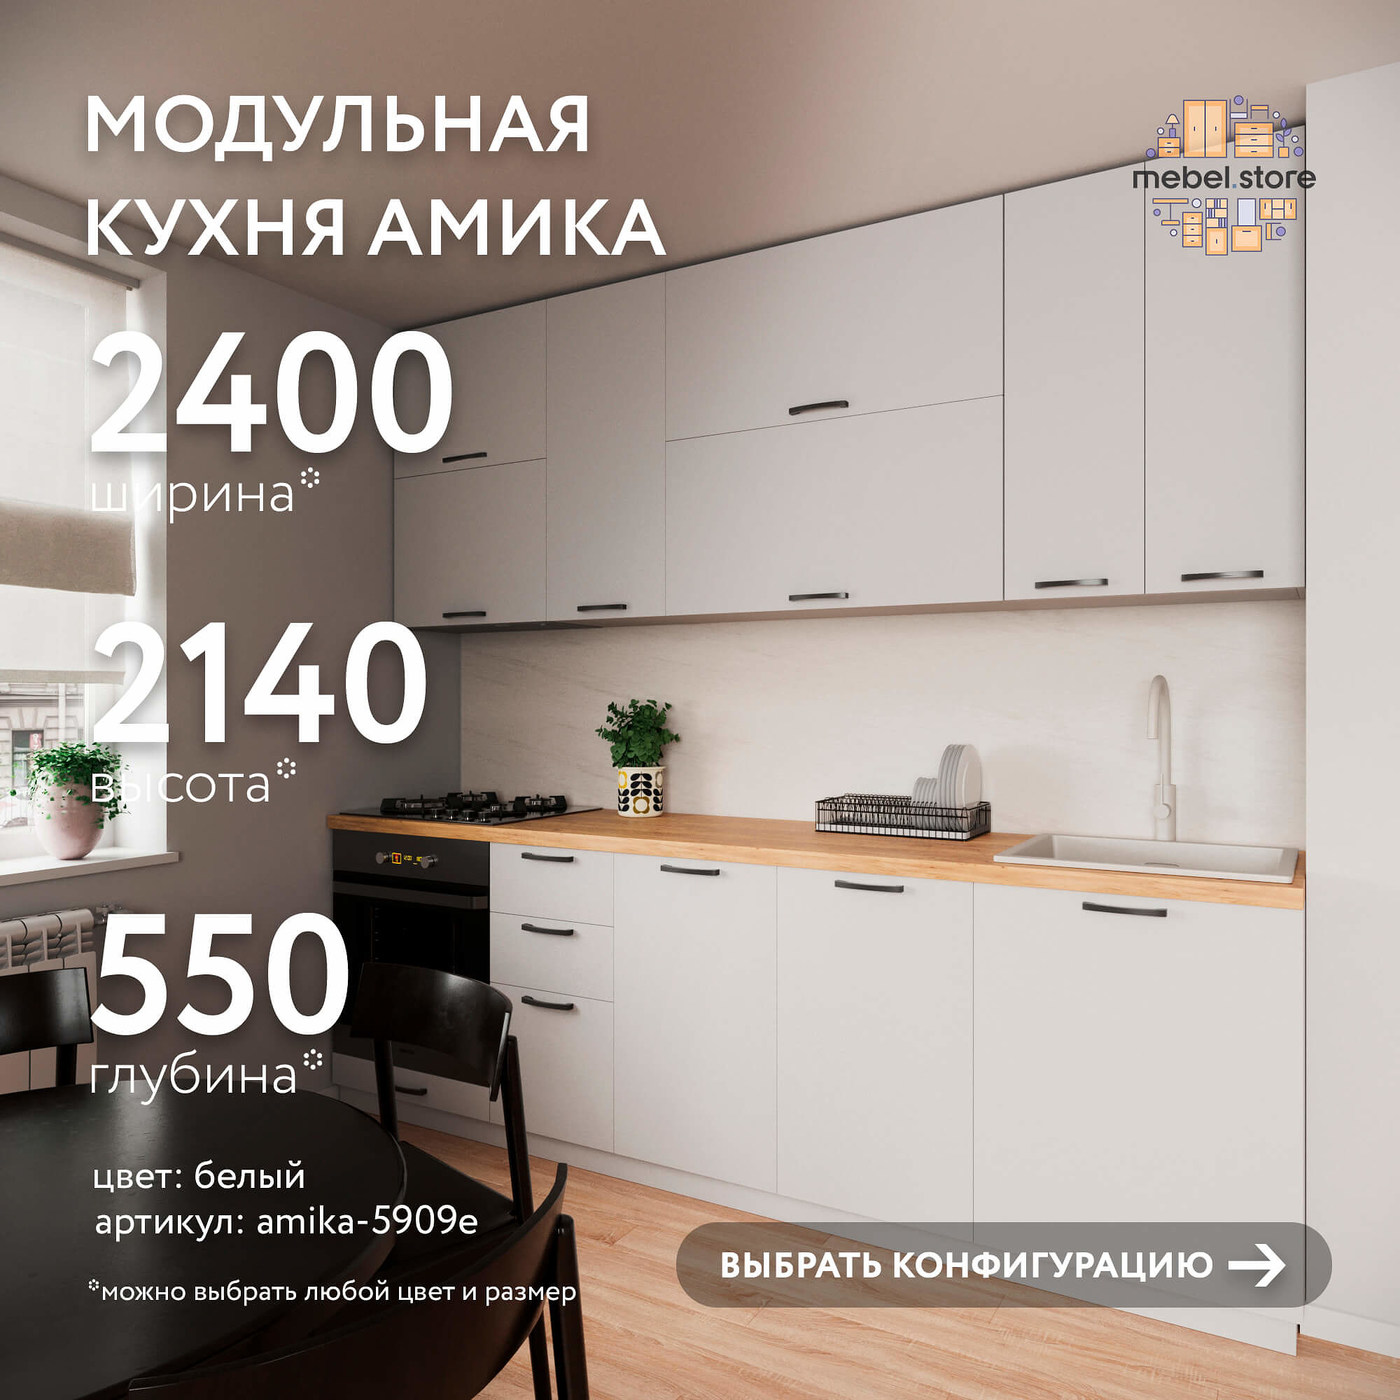 Модульная кухня Амика-5909e минимализм гарнитур - фото 1 large